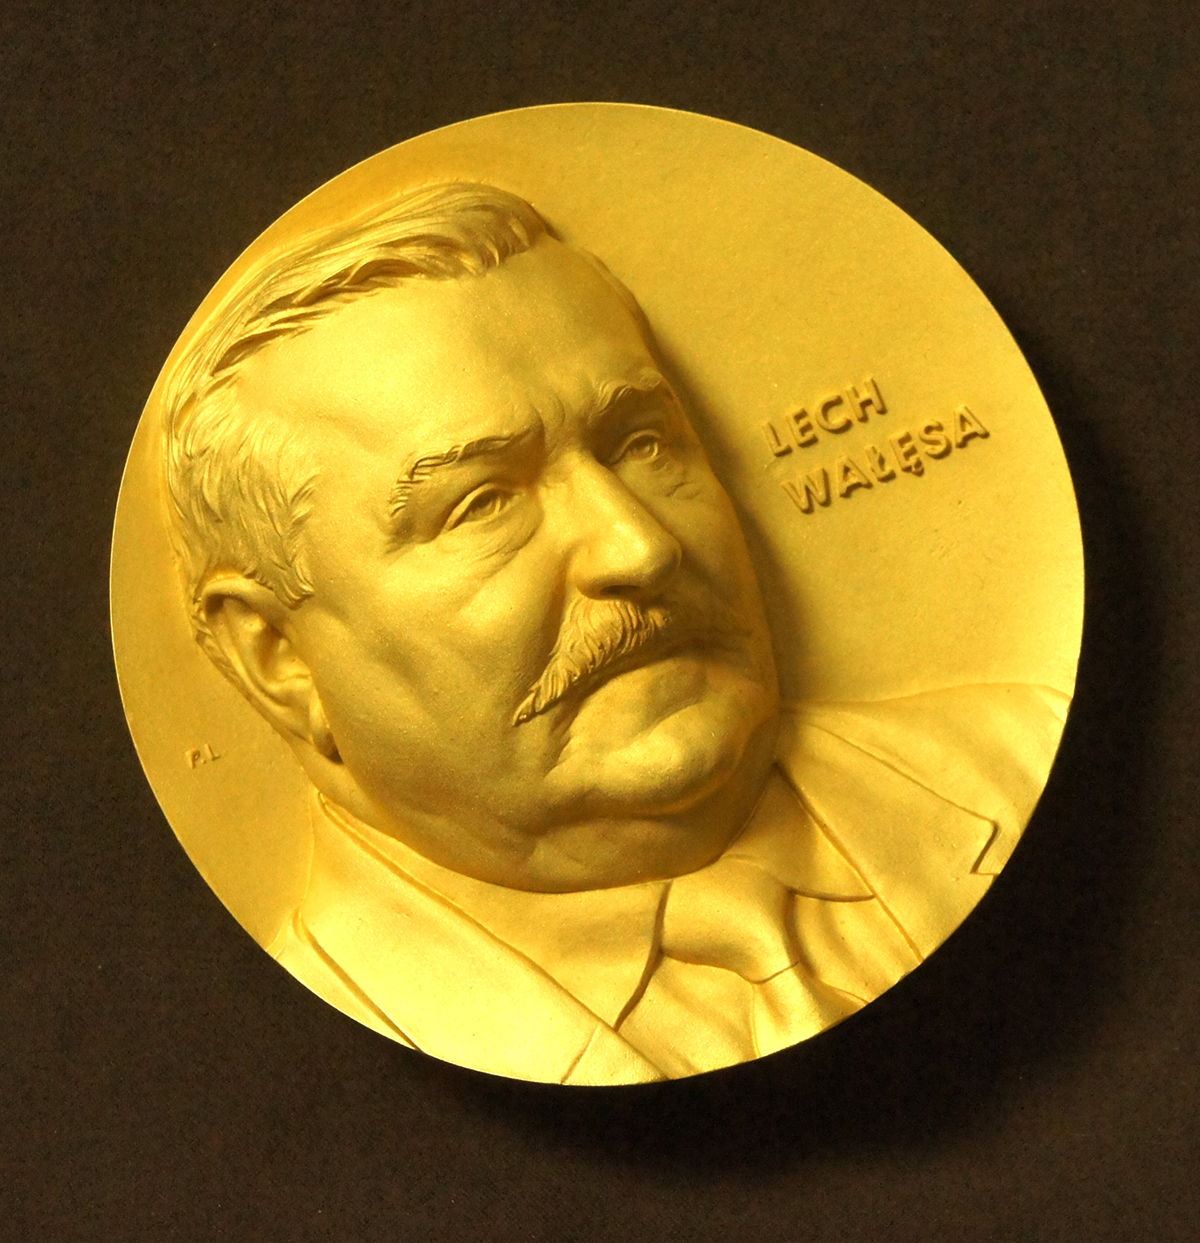 Piotr Lesniak Medal Lech Wałęsa Lech Walesa Portret rzeźba sculpture portrait illustratio ilustracja